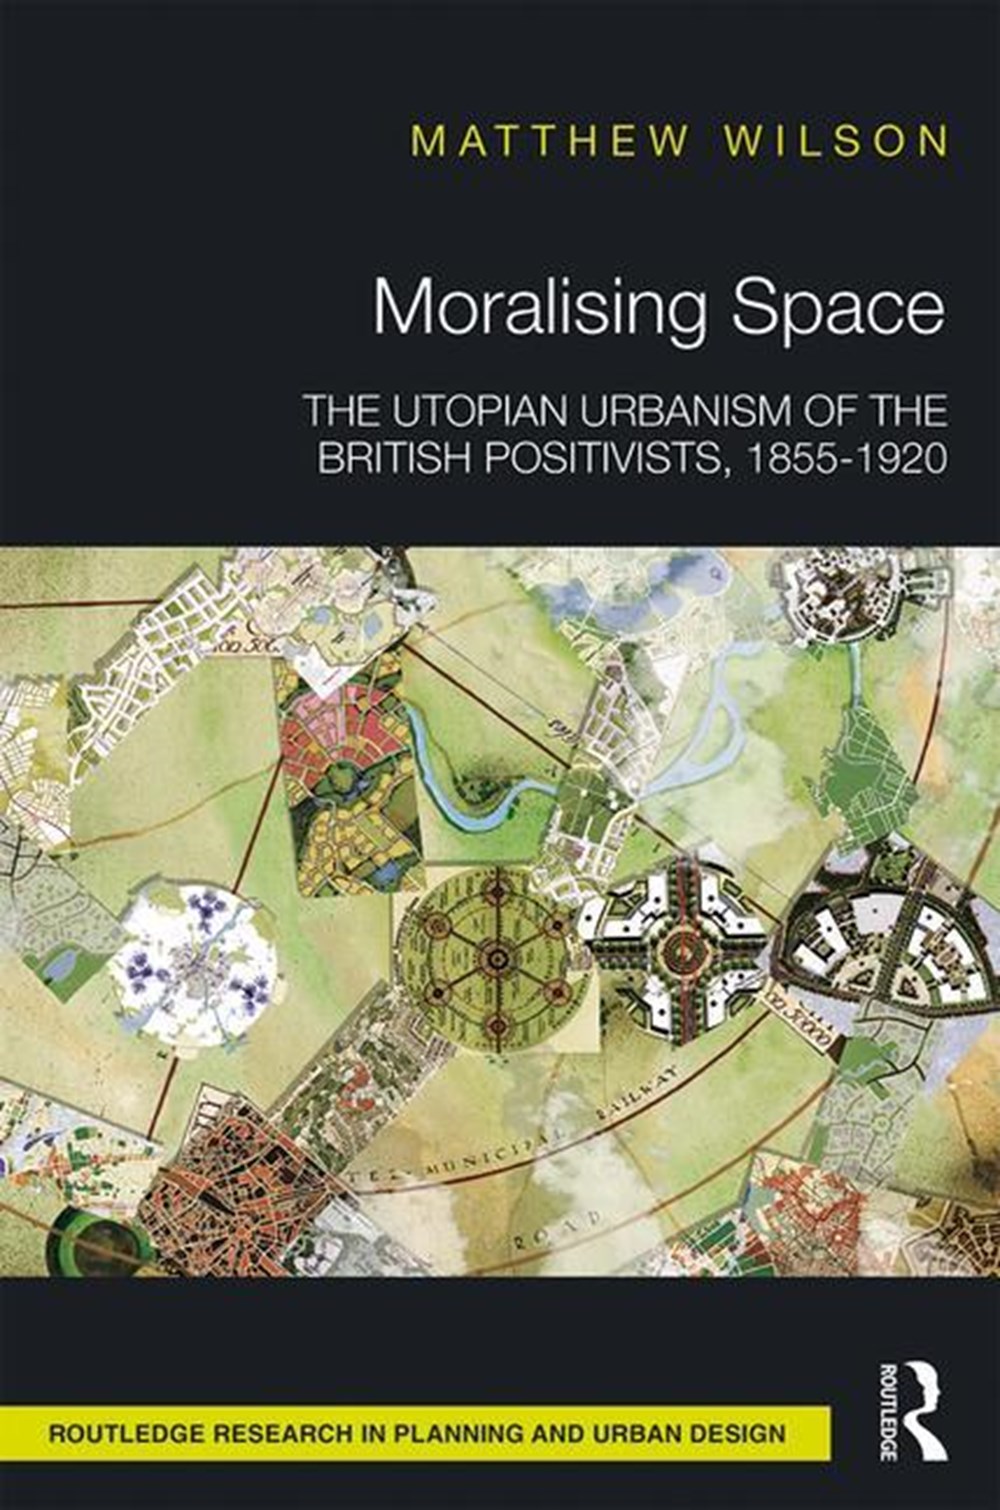 Moralising Space: The Utopian Urbanism of the British Positivists, 1855-1920